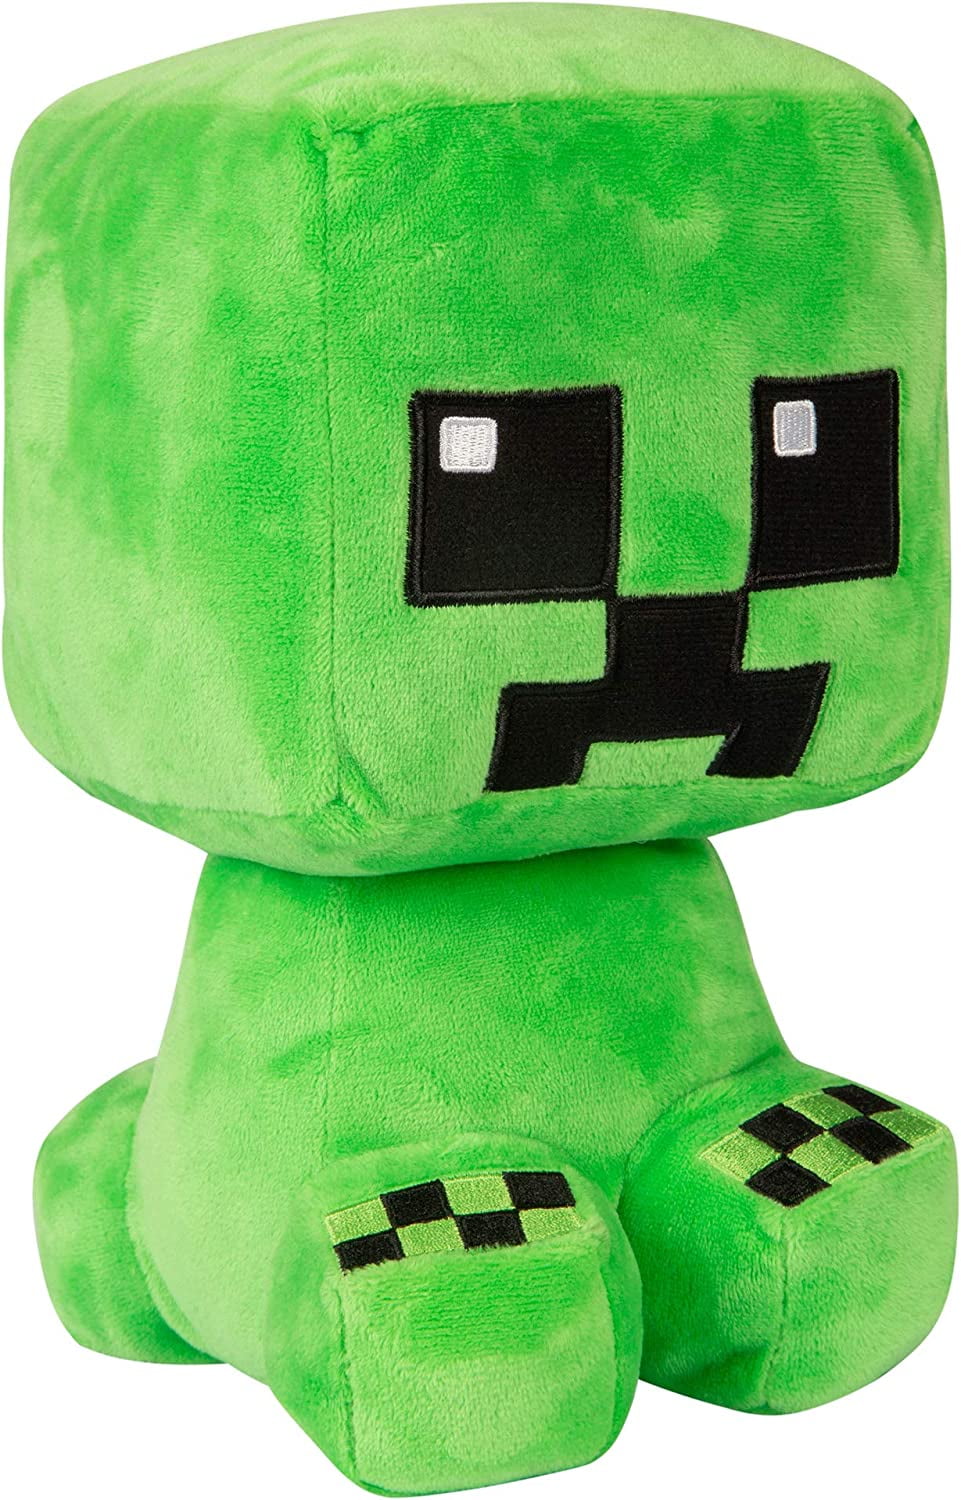 Minecraft Crafter Creeper Plush Stuffed Toy Green 10 Tall